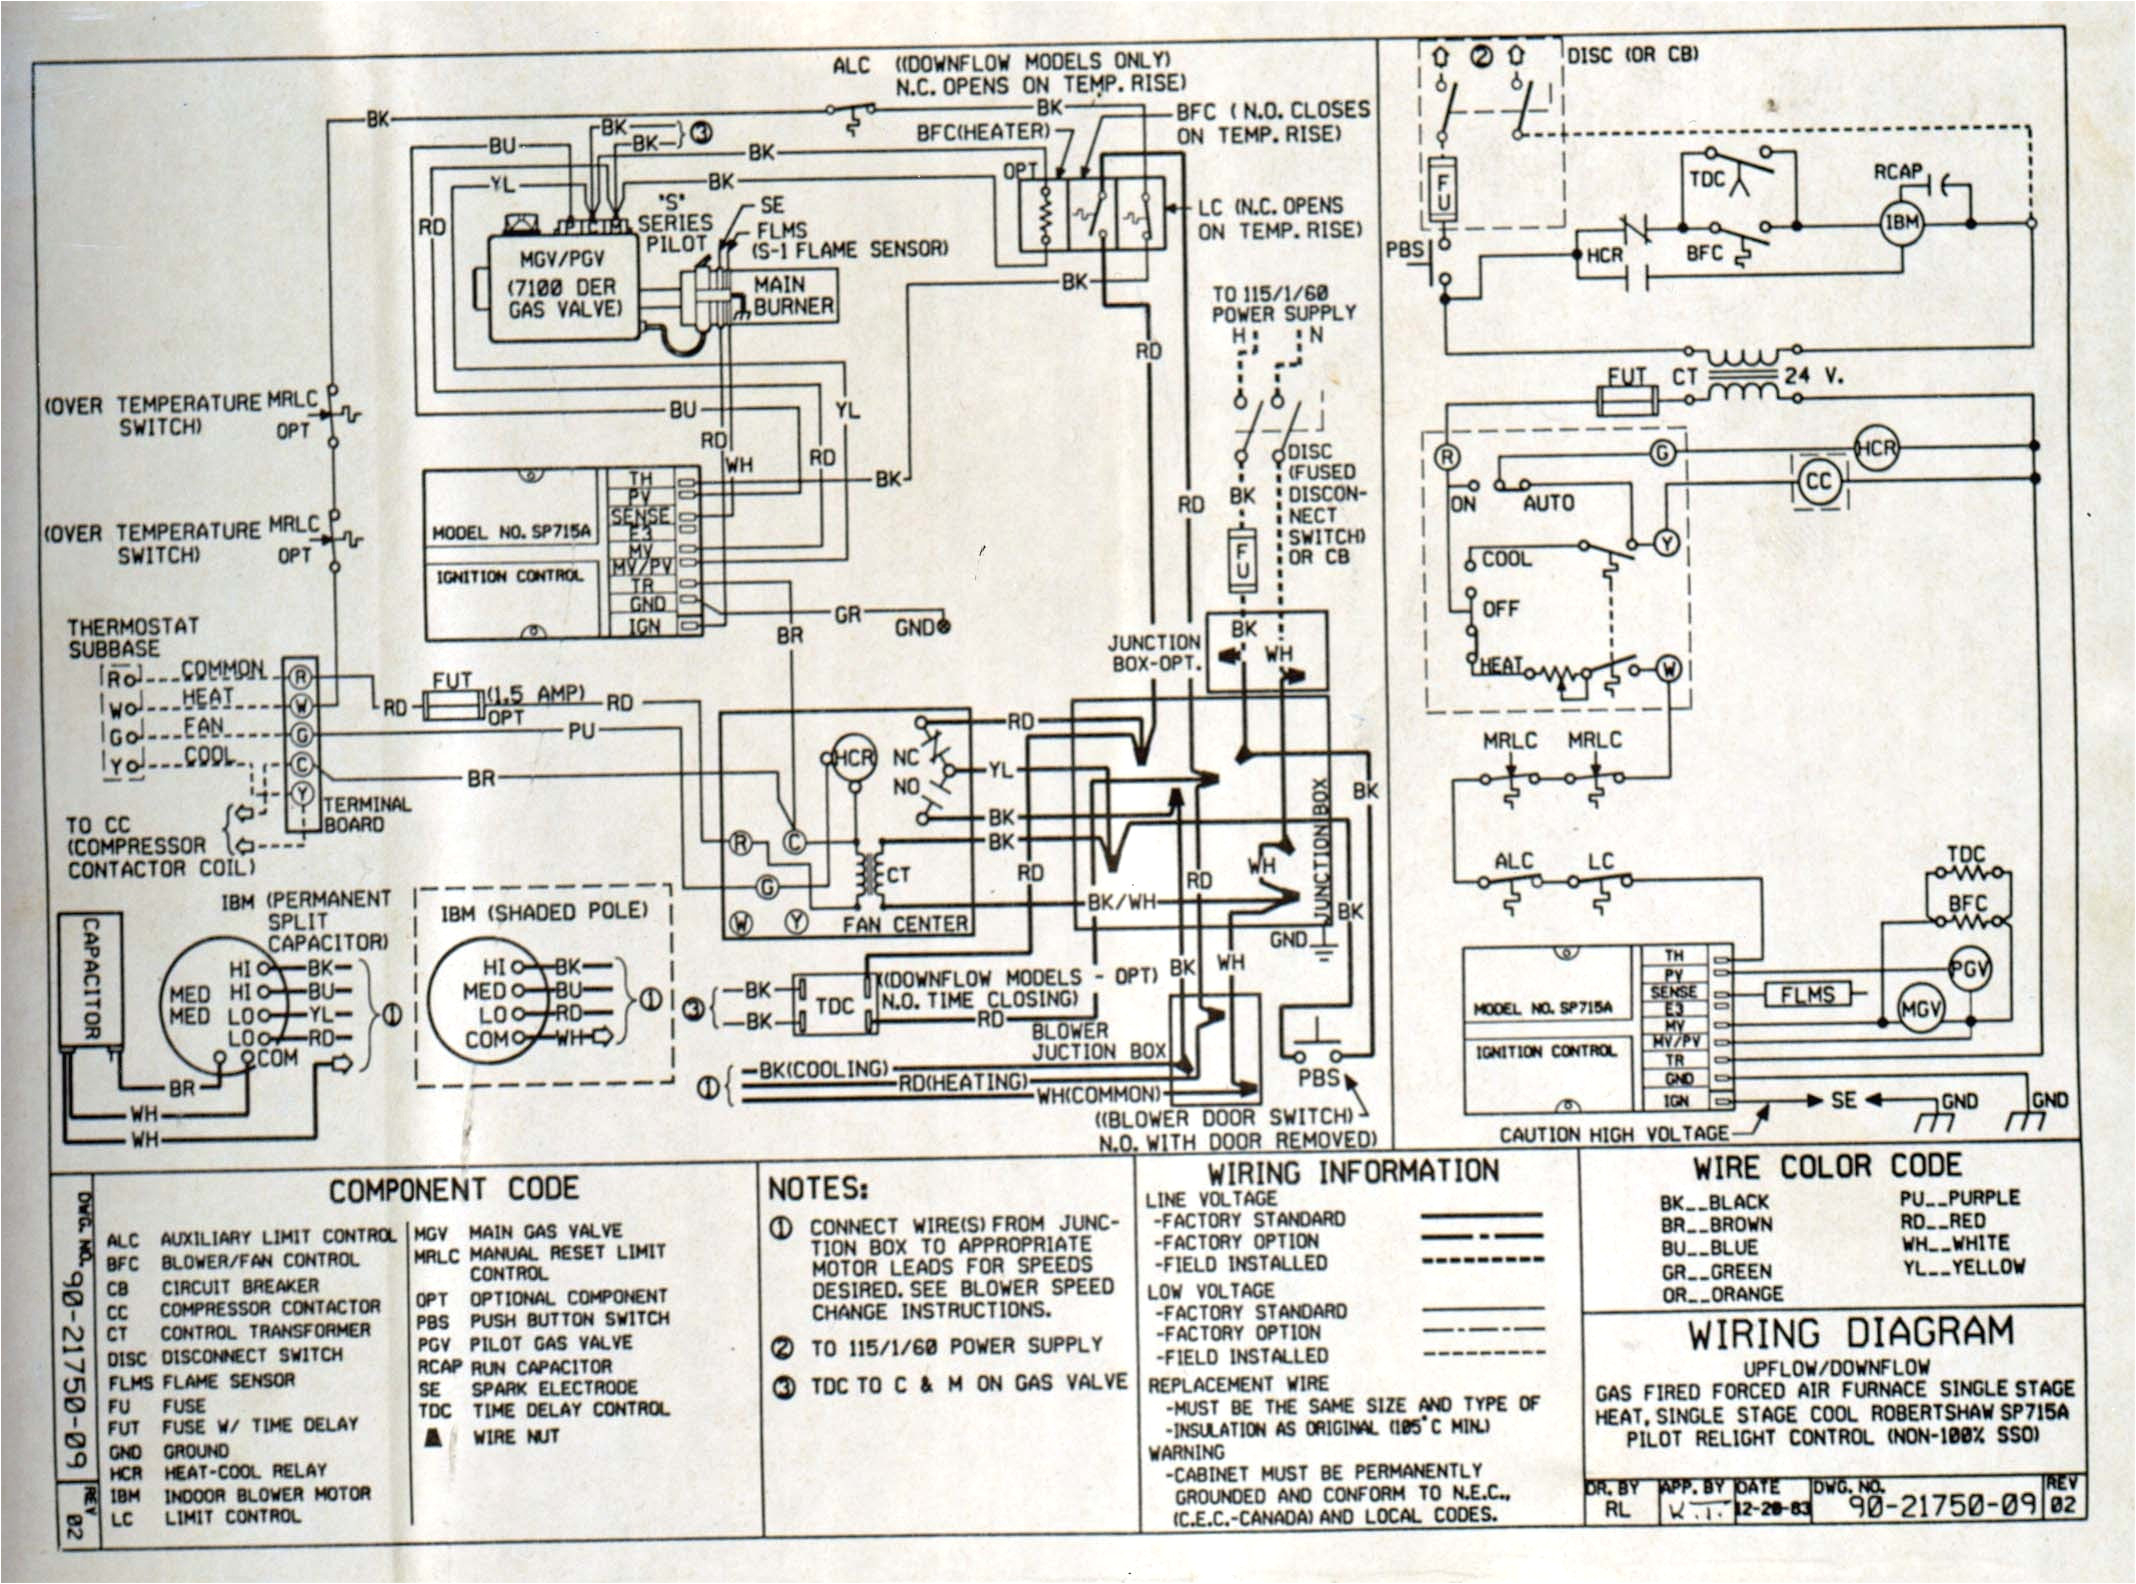 gordon piatt wiring diagram luxury power flame burners wiring diagrams g j library wiring